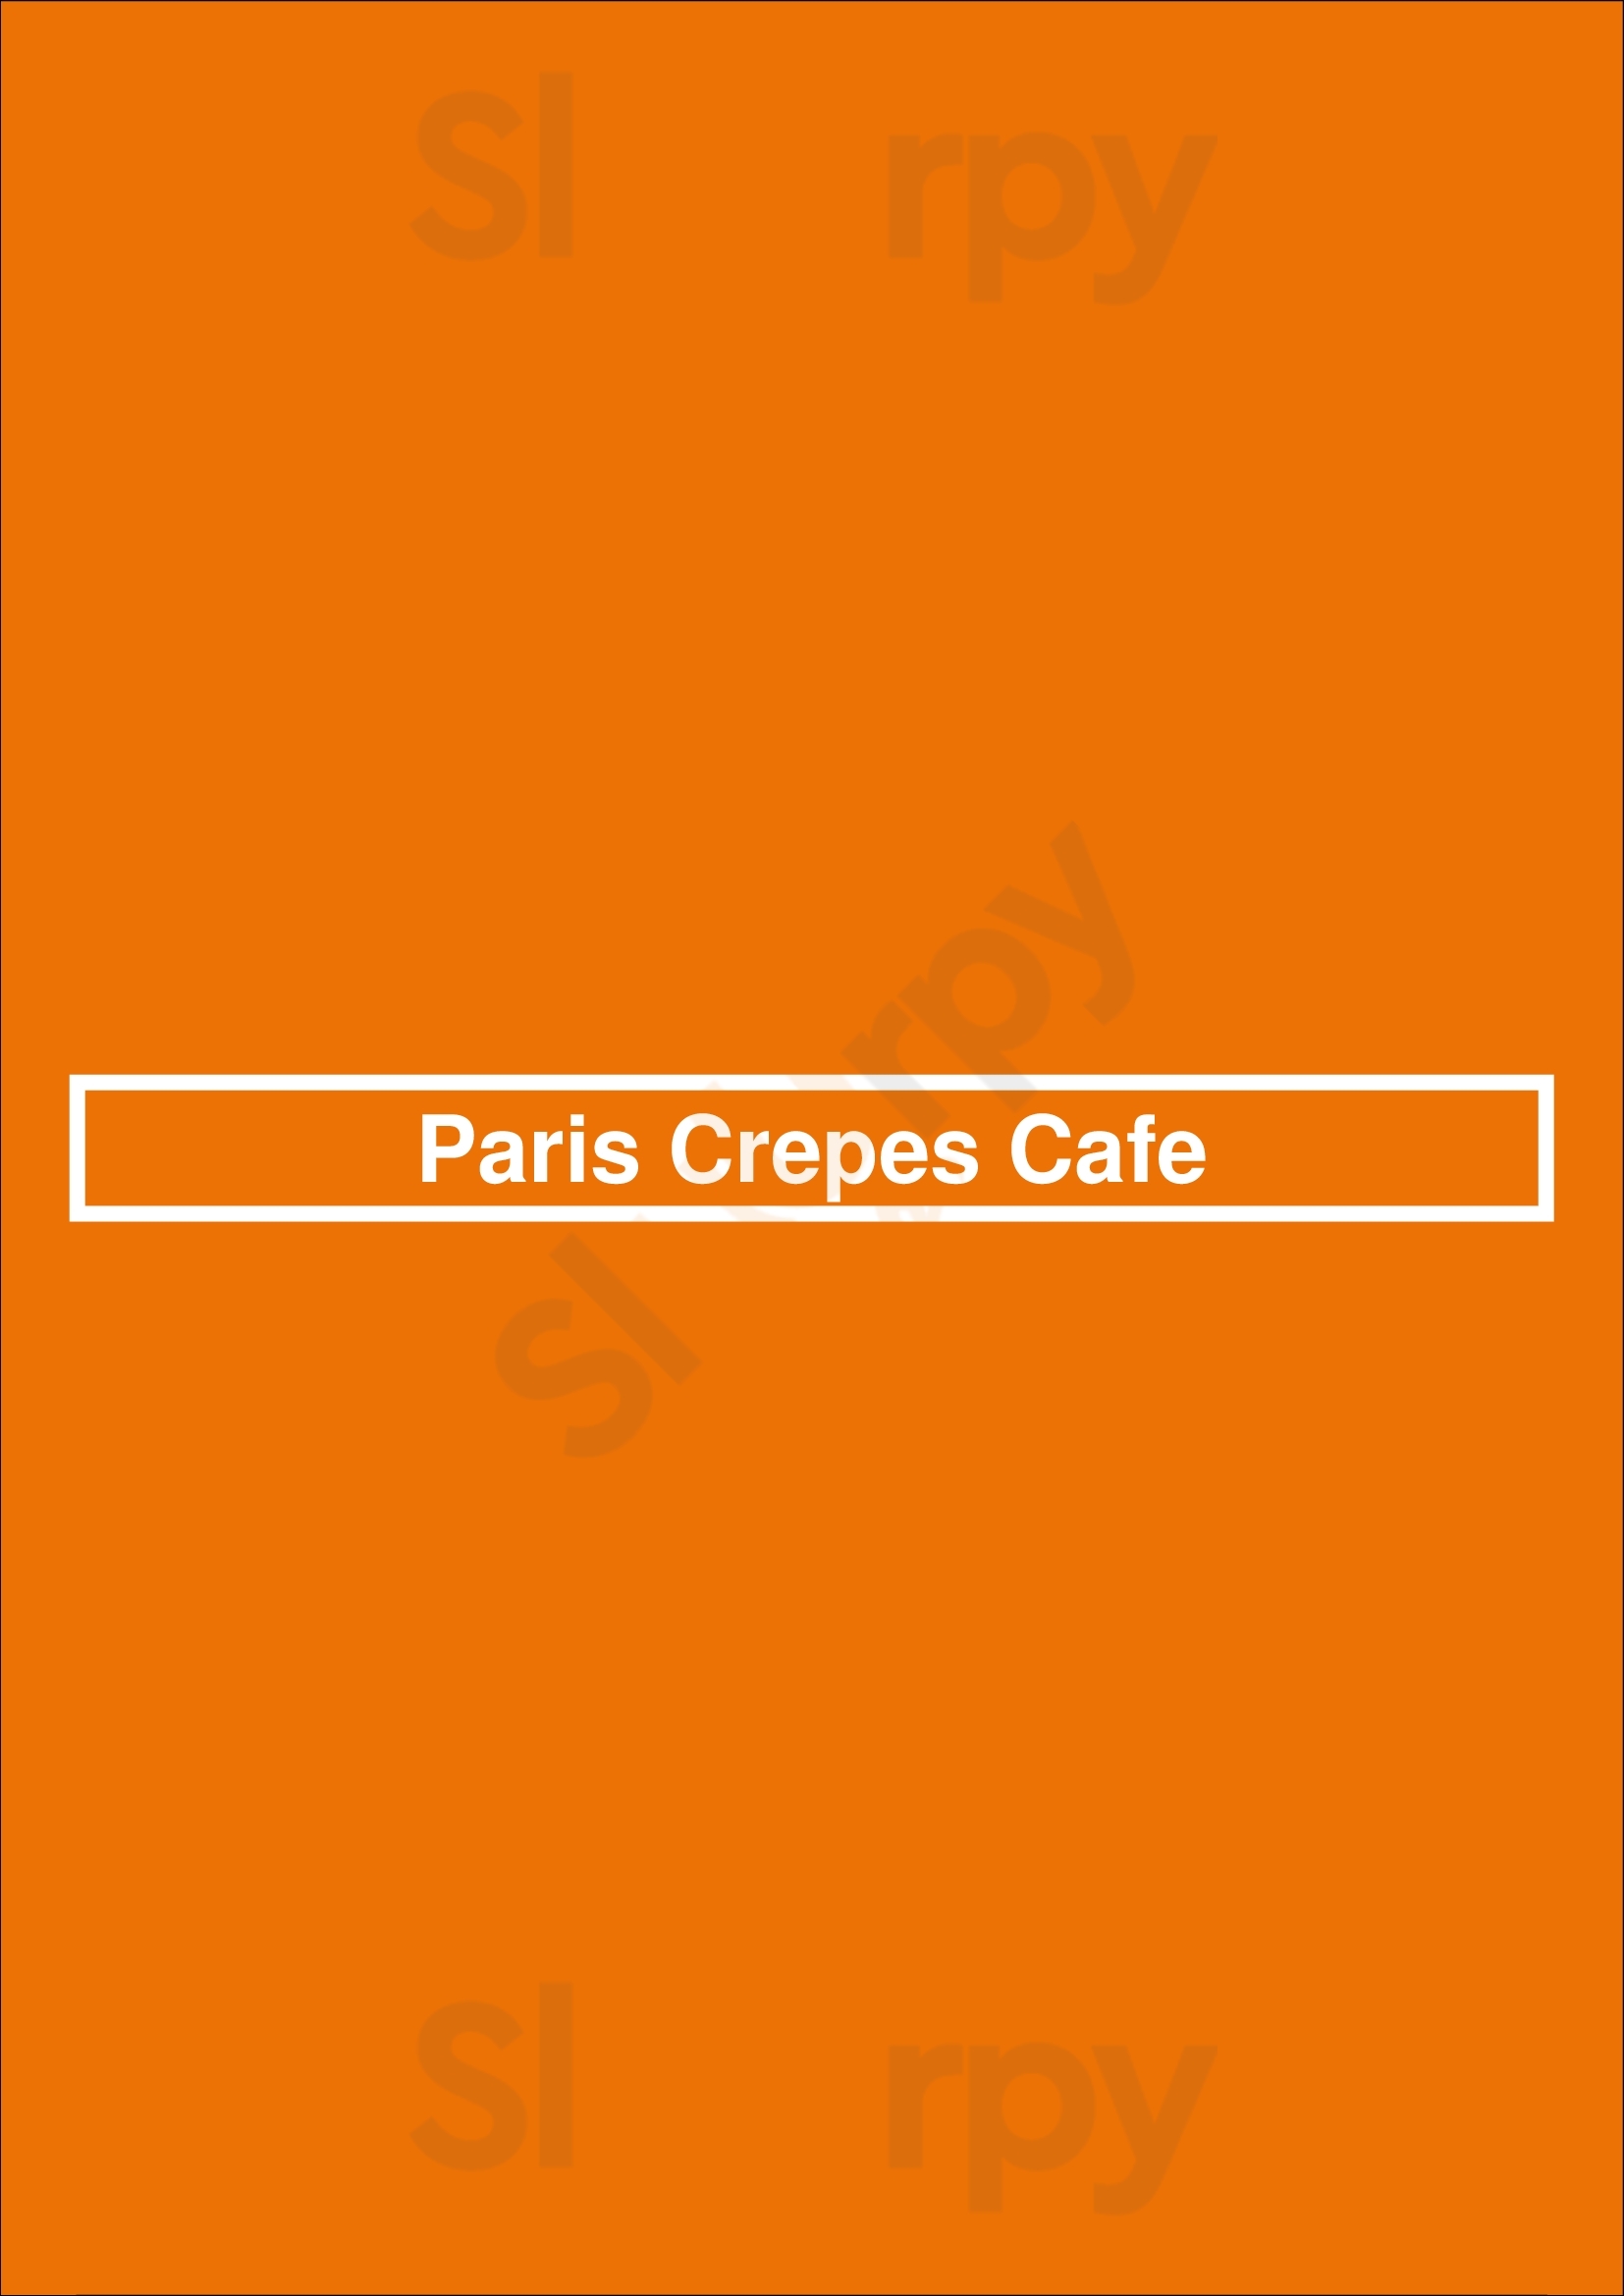 Paris Crepes Cafe Niagara Falls Menu - 1